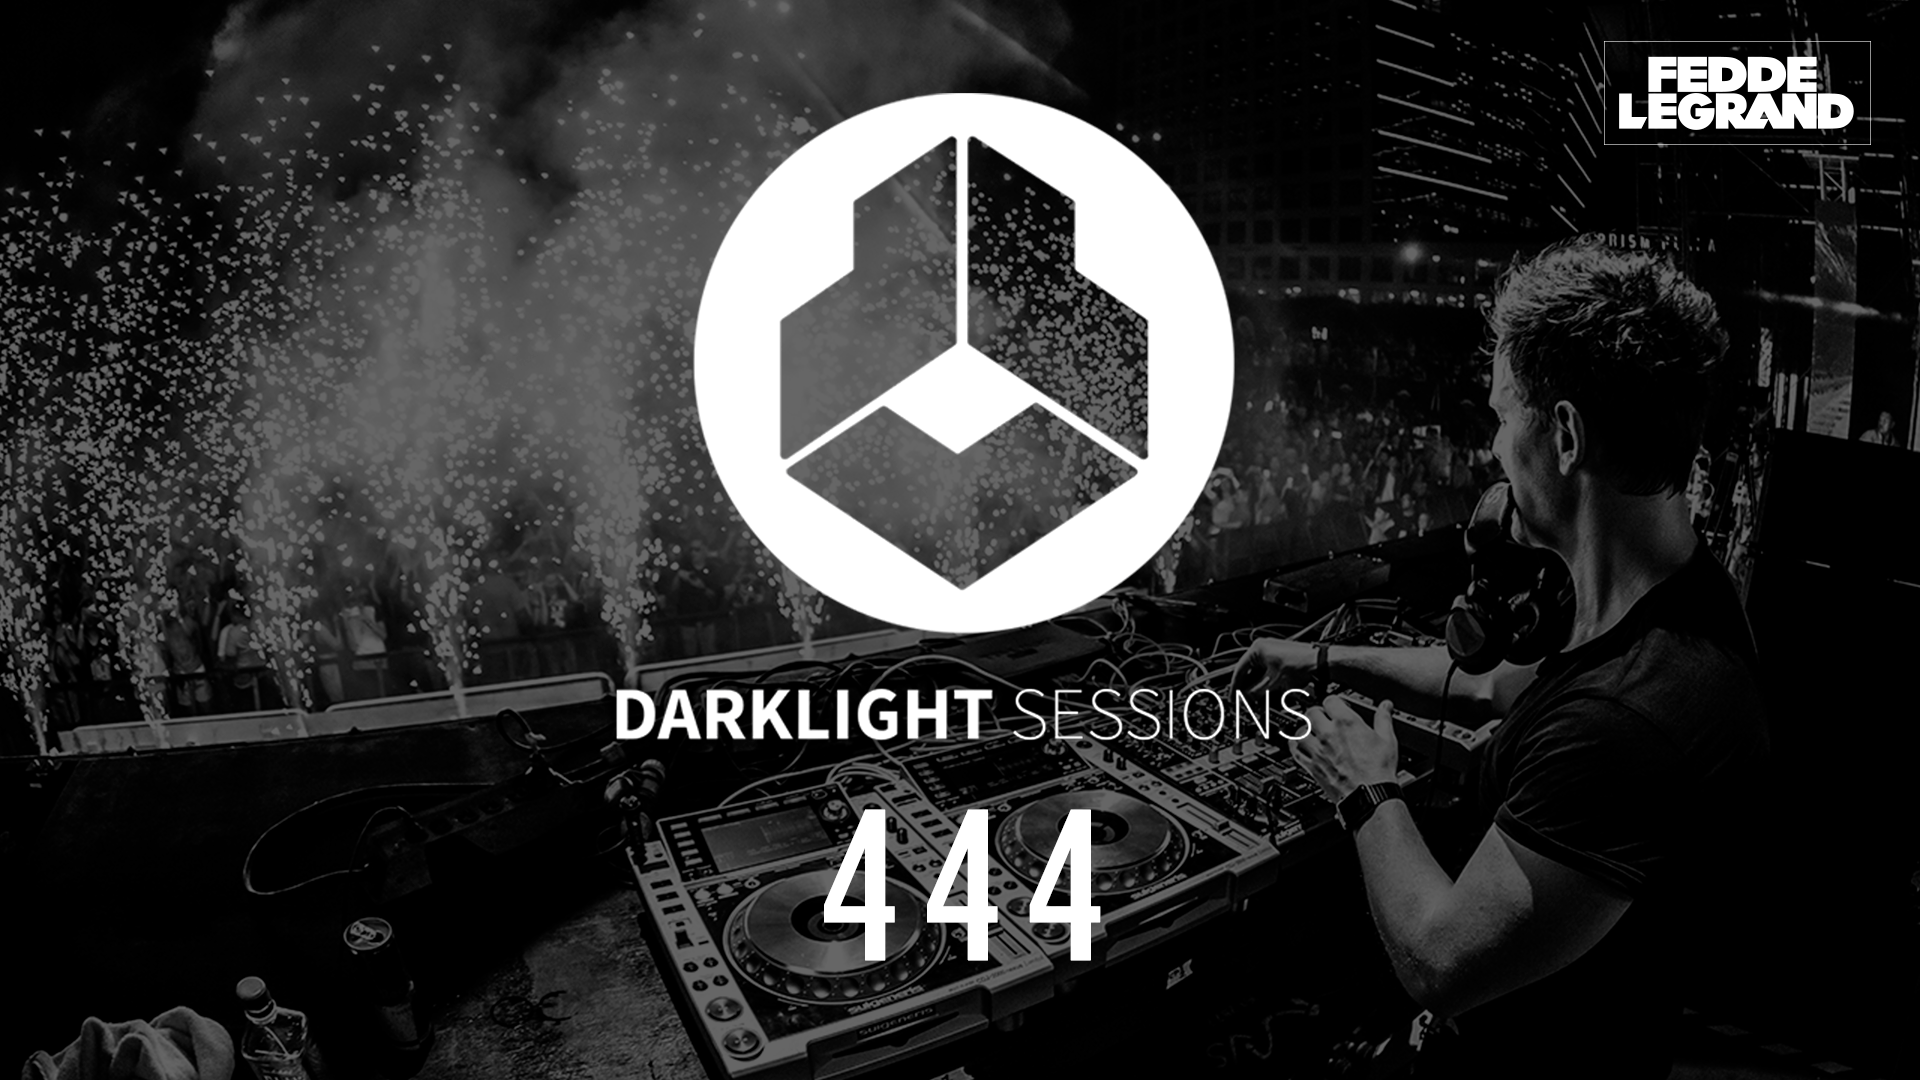 Darklight Sessions 444